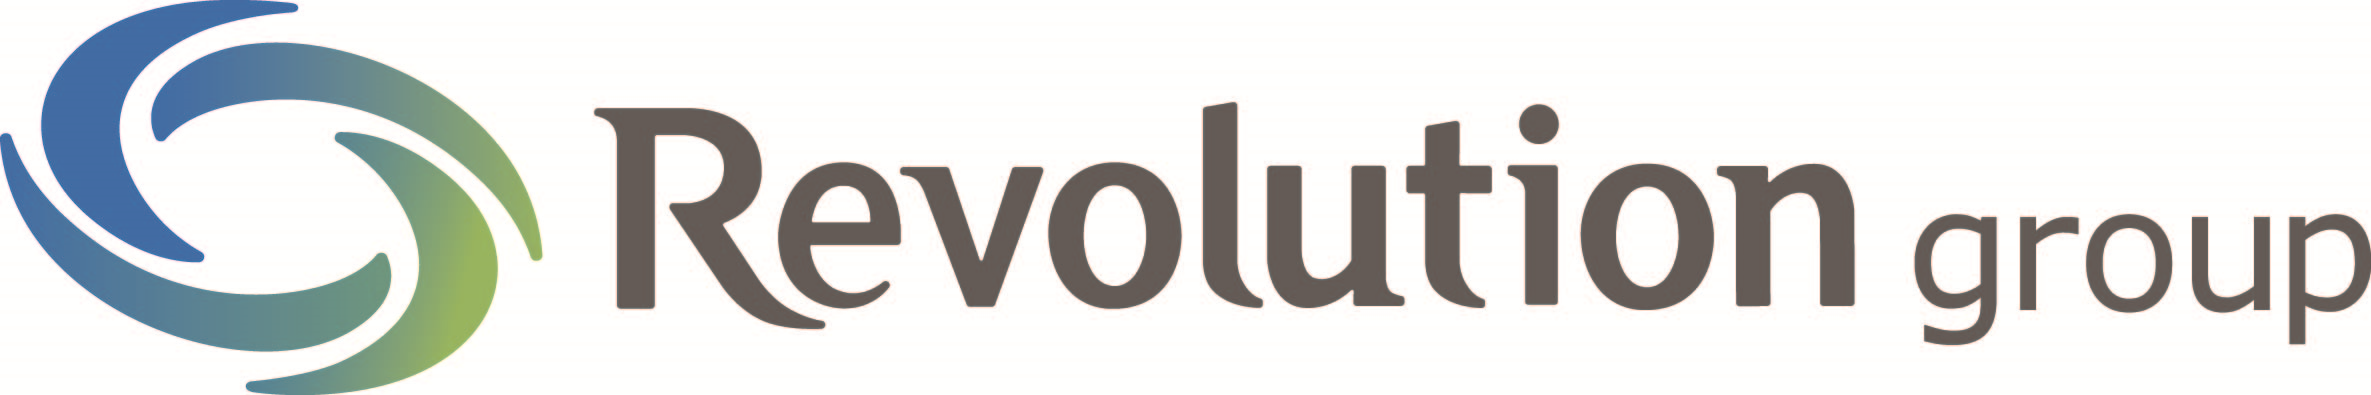 Revolution Group Company Logo